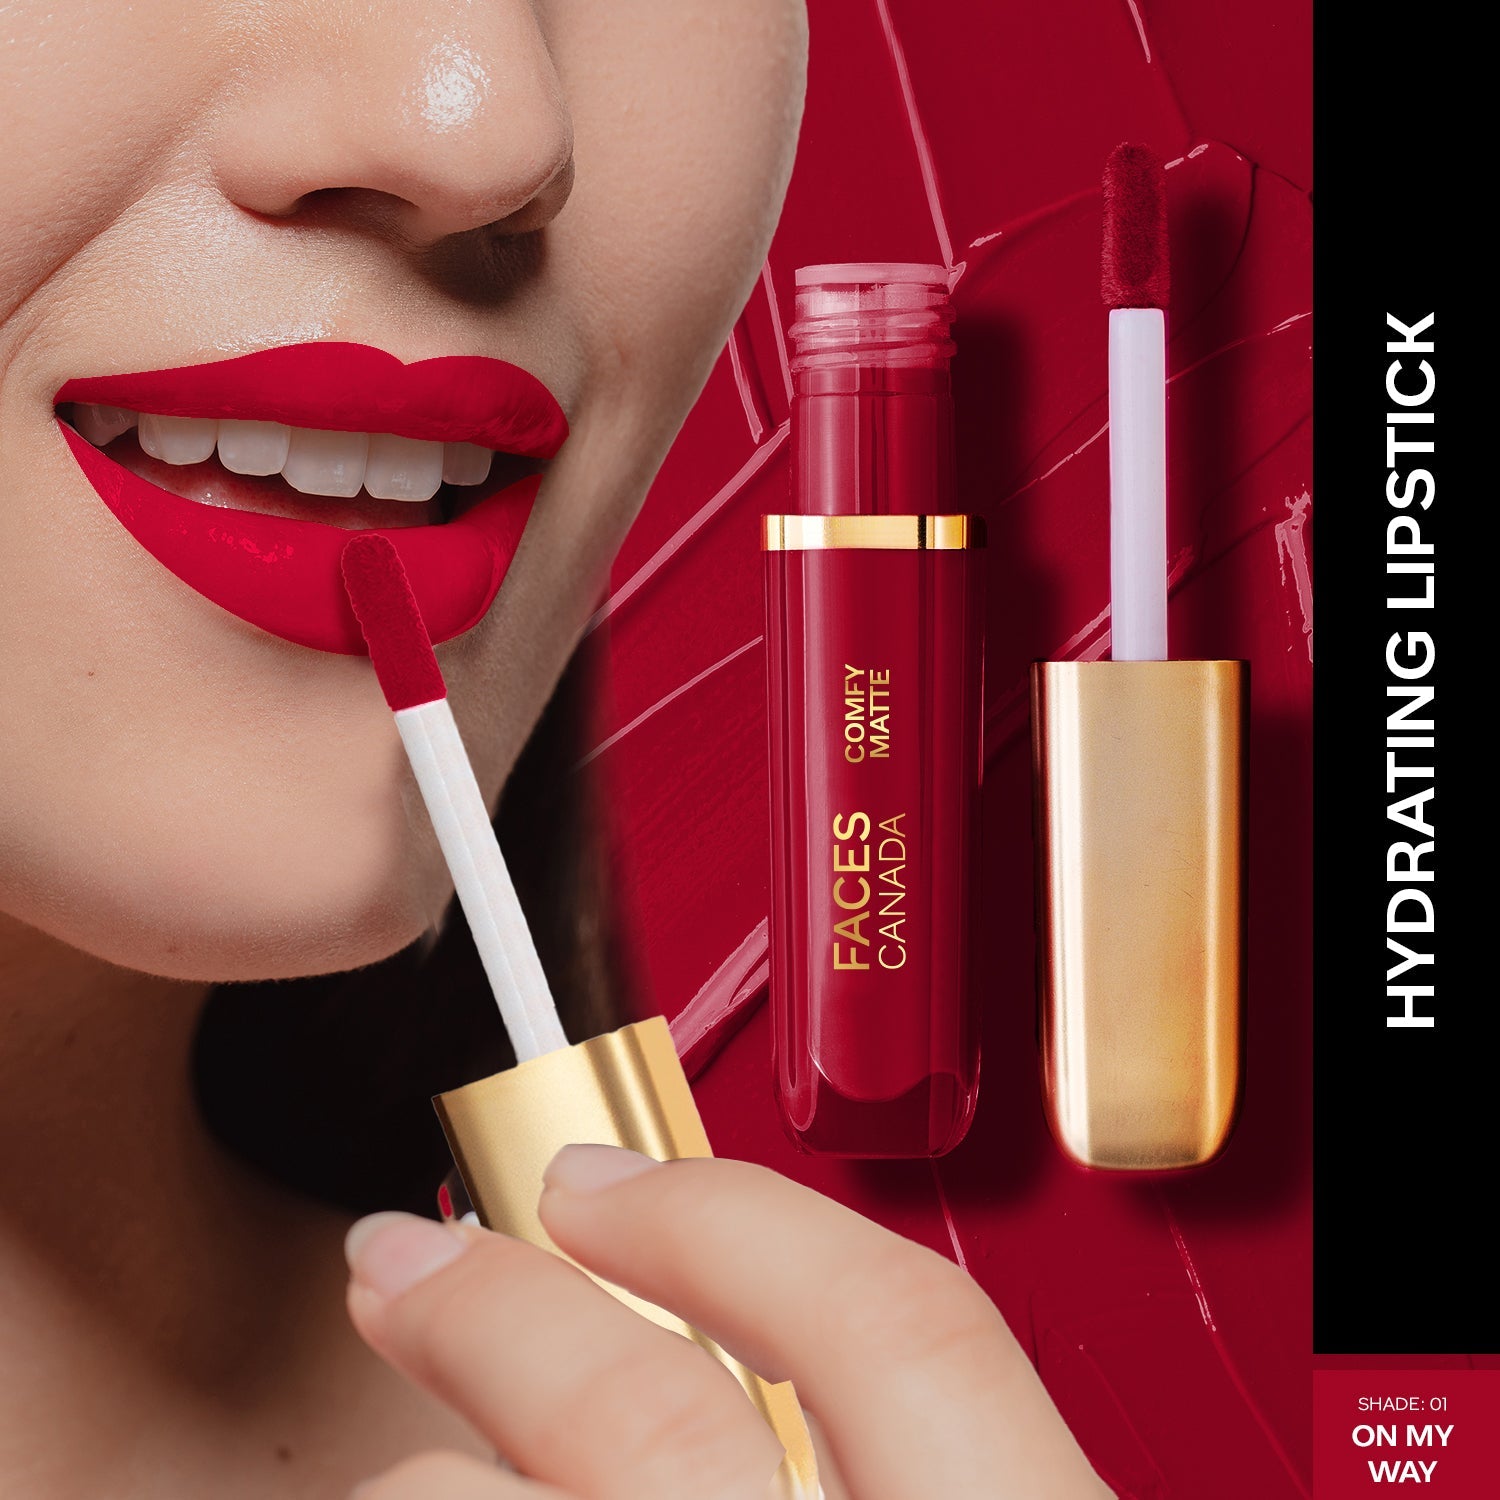 New Faces Canada Comfy Silk Liquid Lipstick Review &Swatches